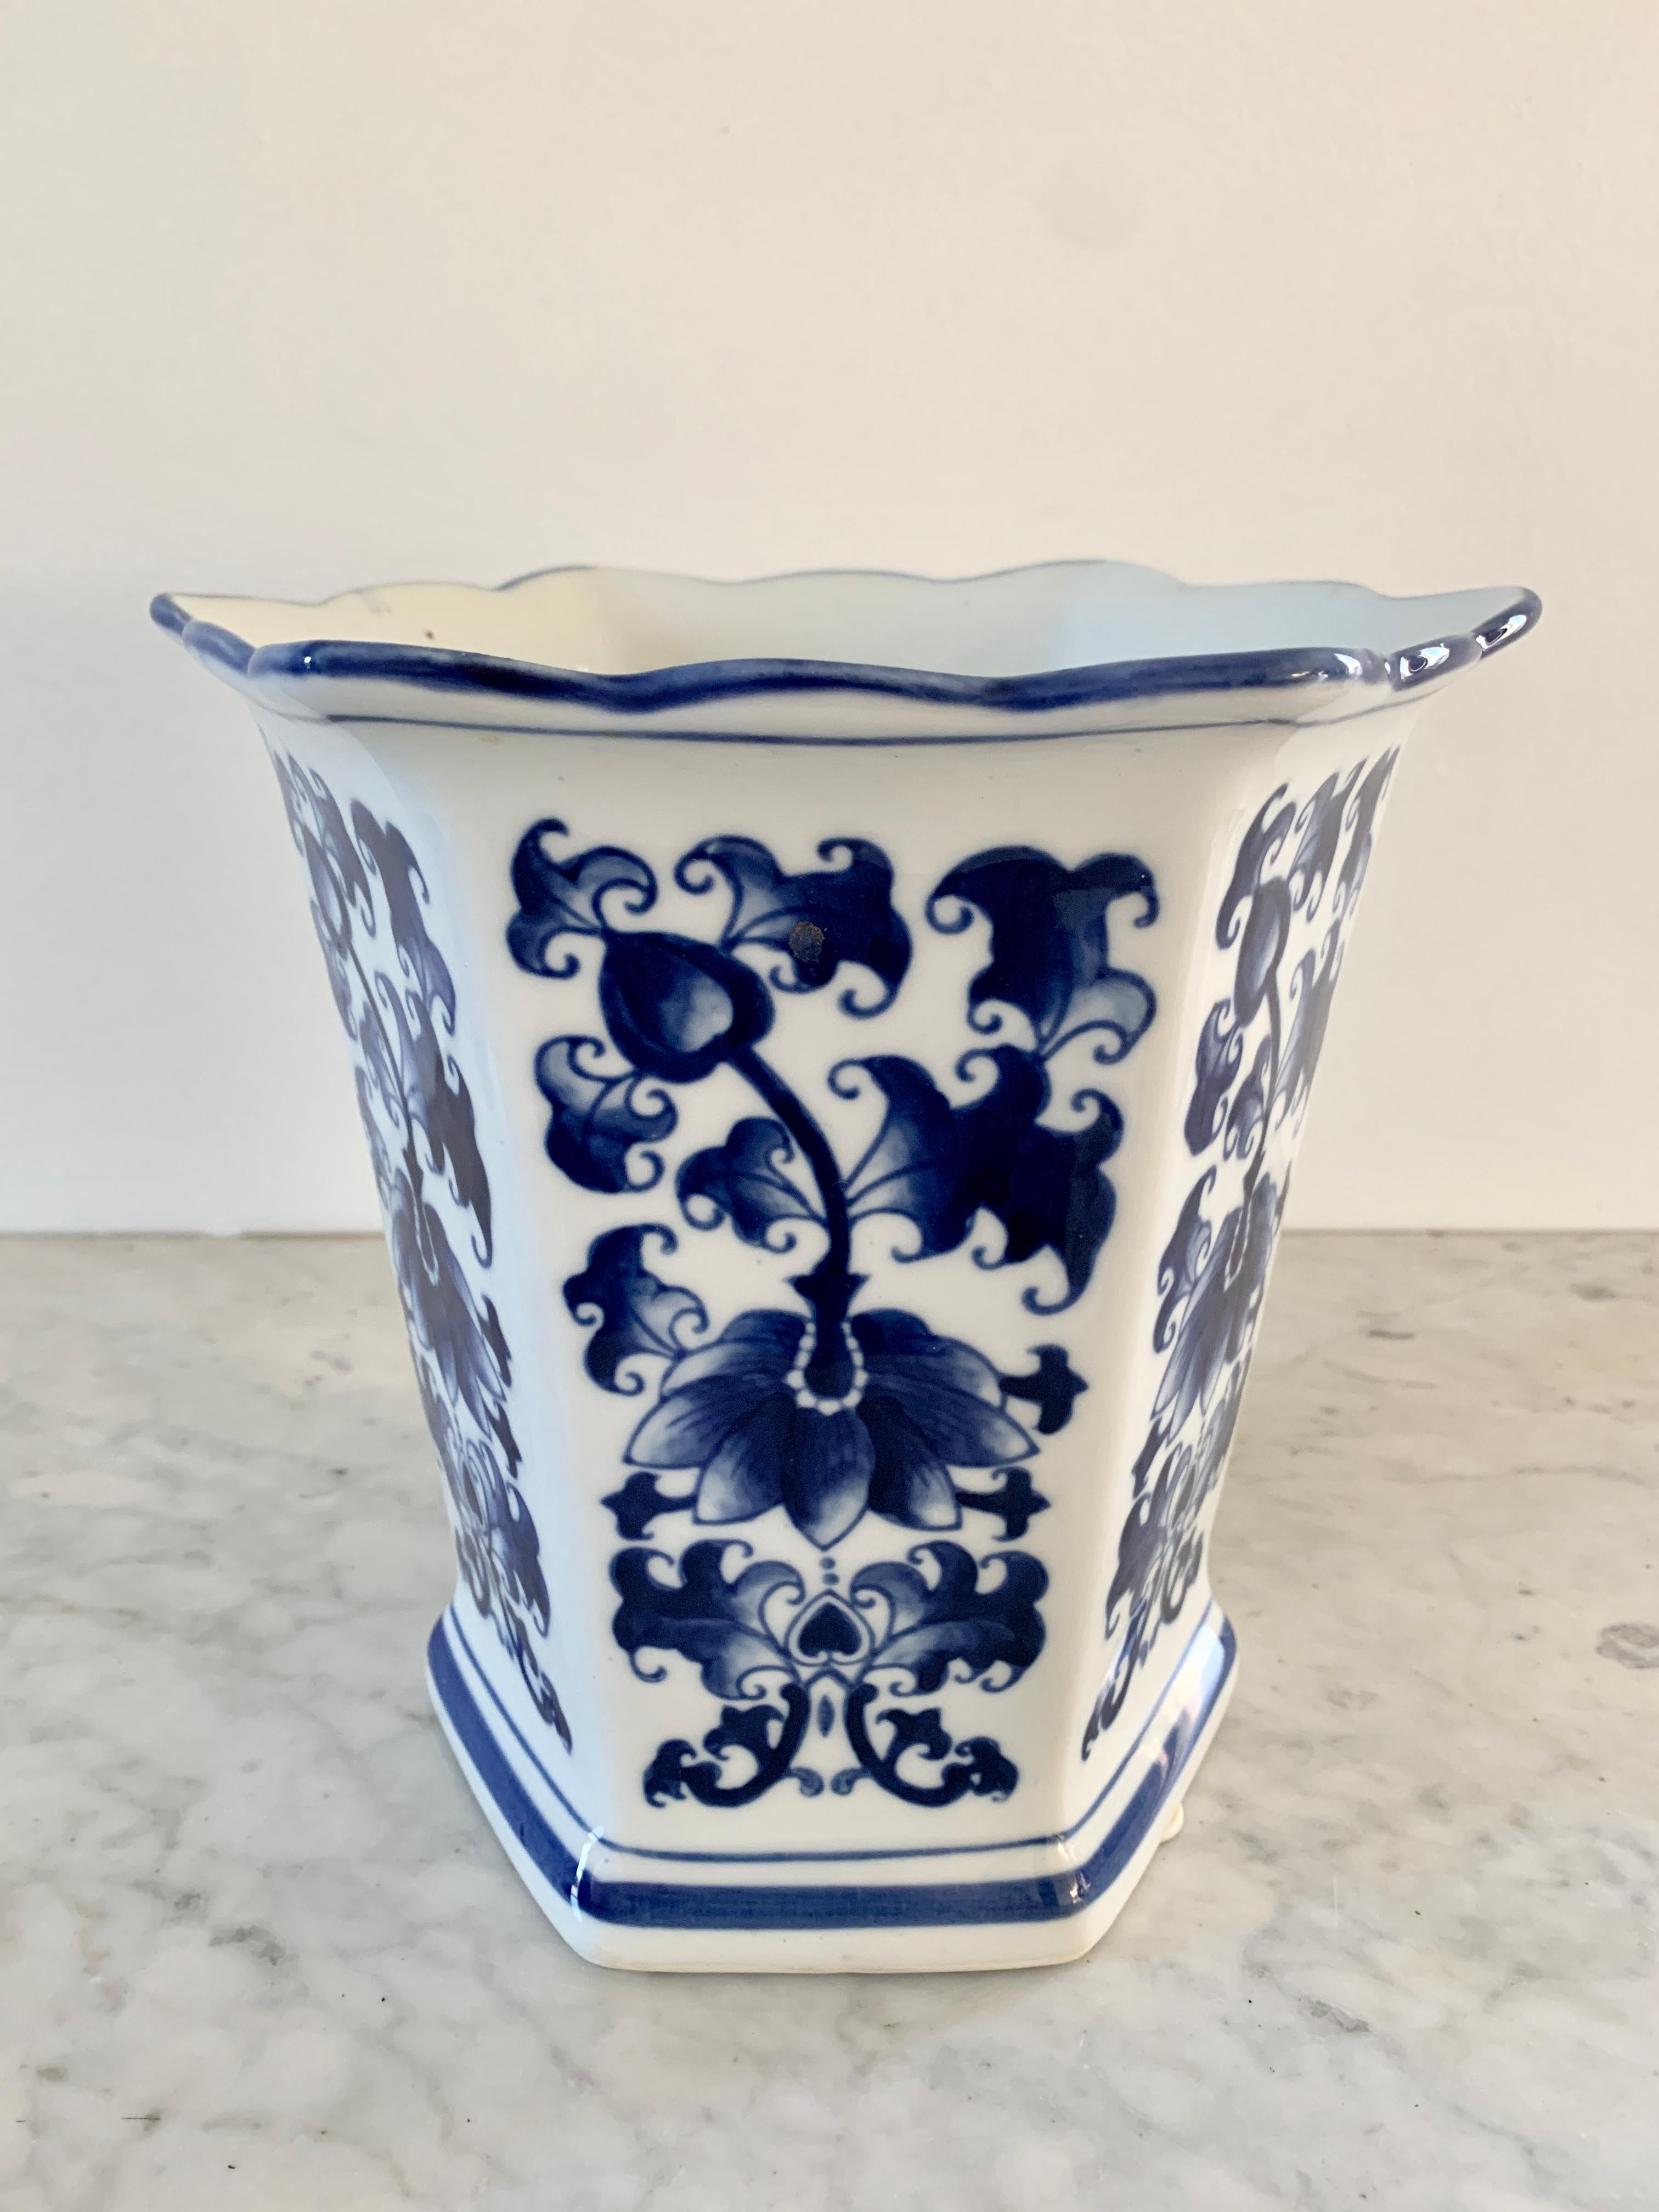 Chinoiserie Blue and White Porcelain Hexagonal Vases, Pair 1